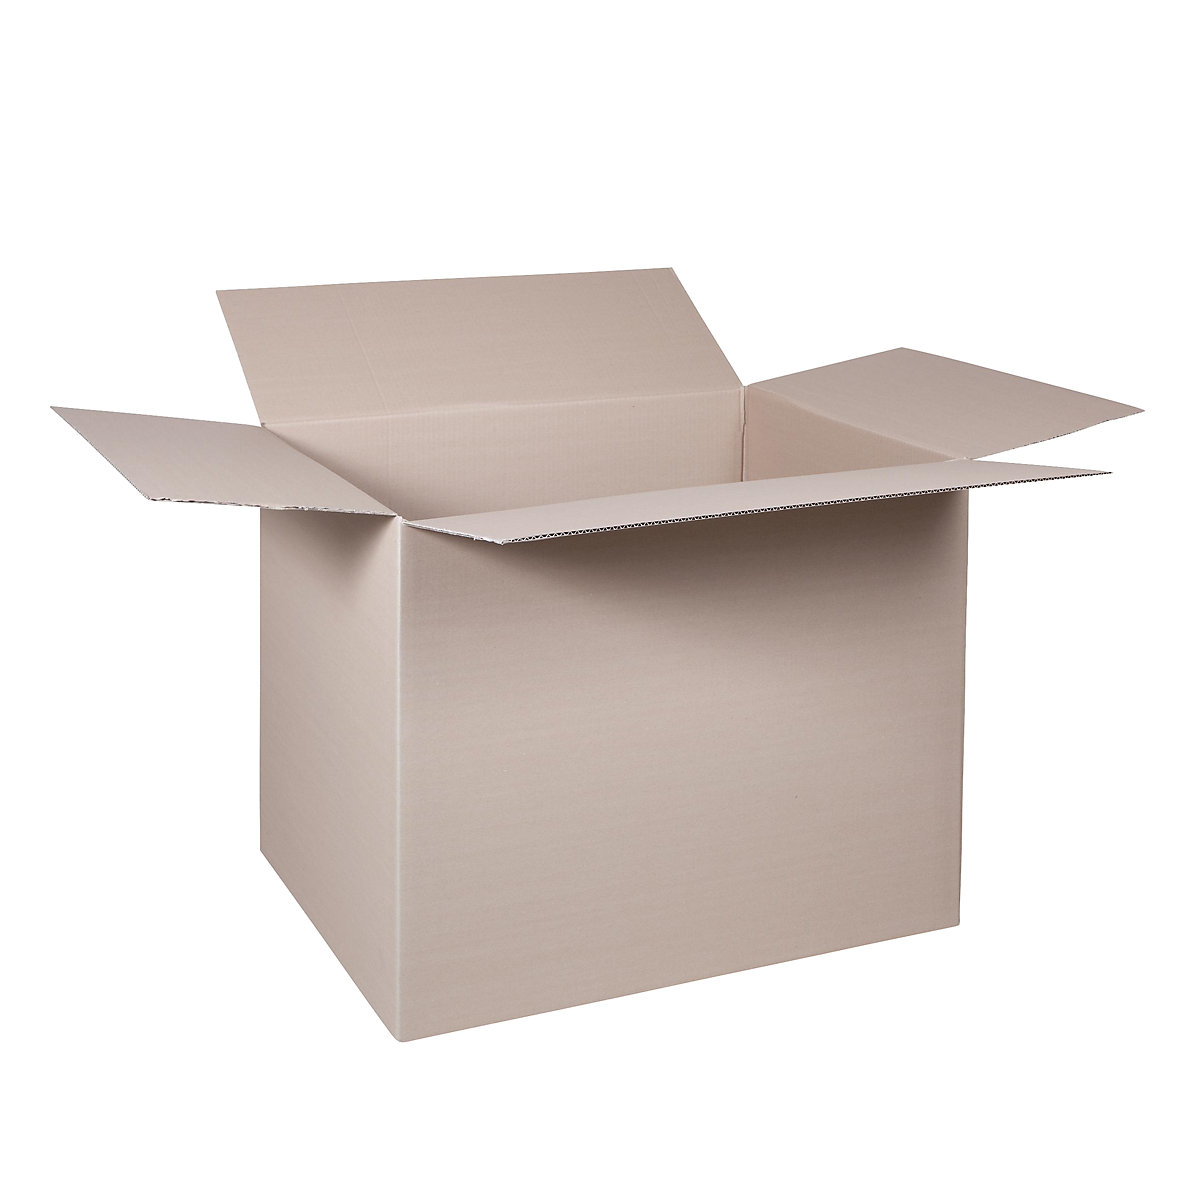 Folding cardboard box, FEFCO 0201, made of single fluted cardboard, internal dimensions 780 x 580 x 600 mm, pack of 50-30